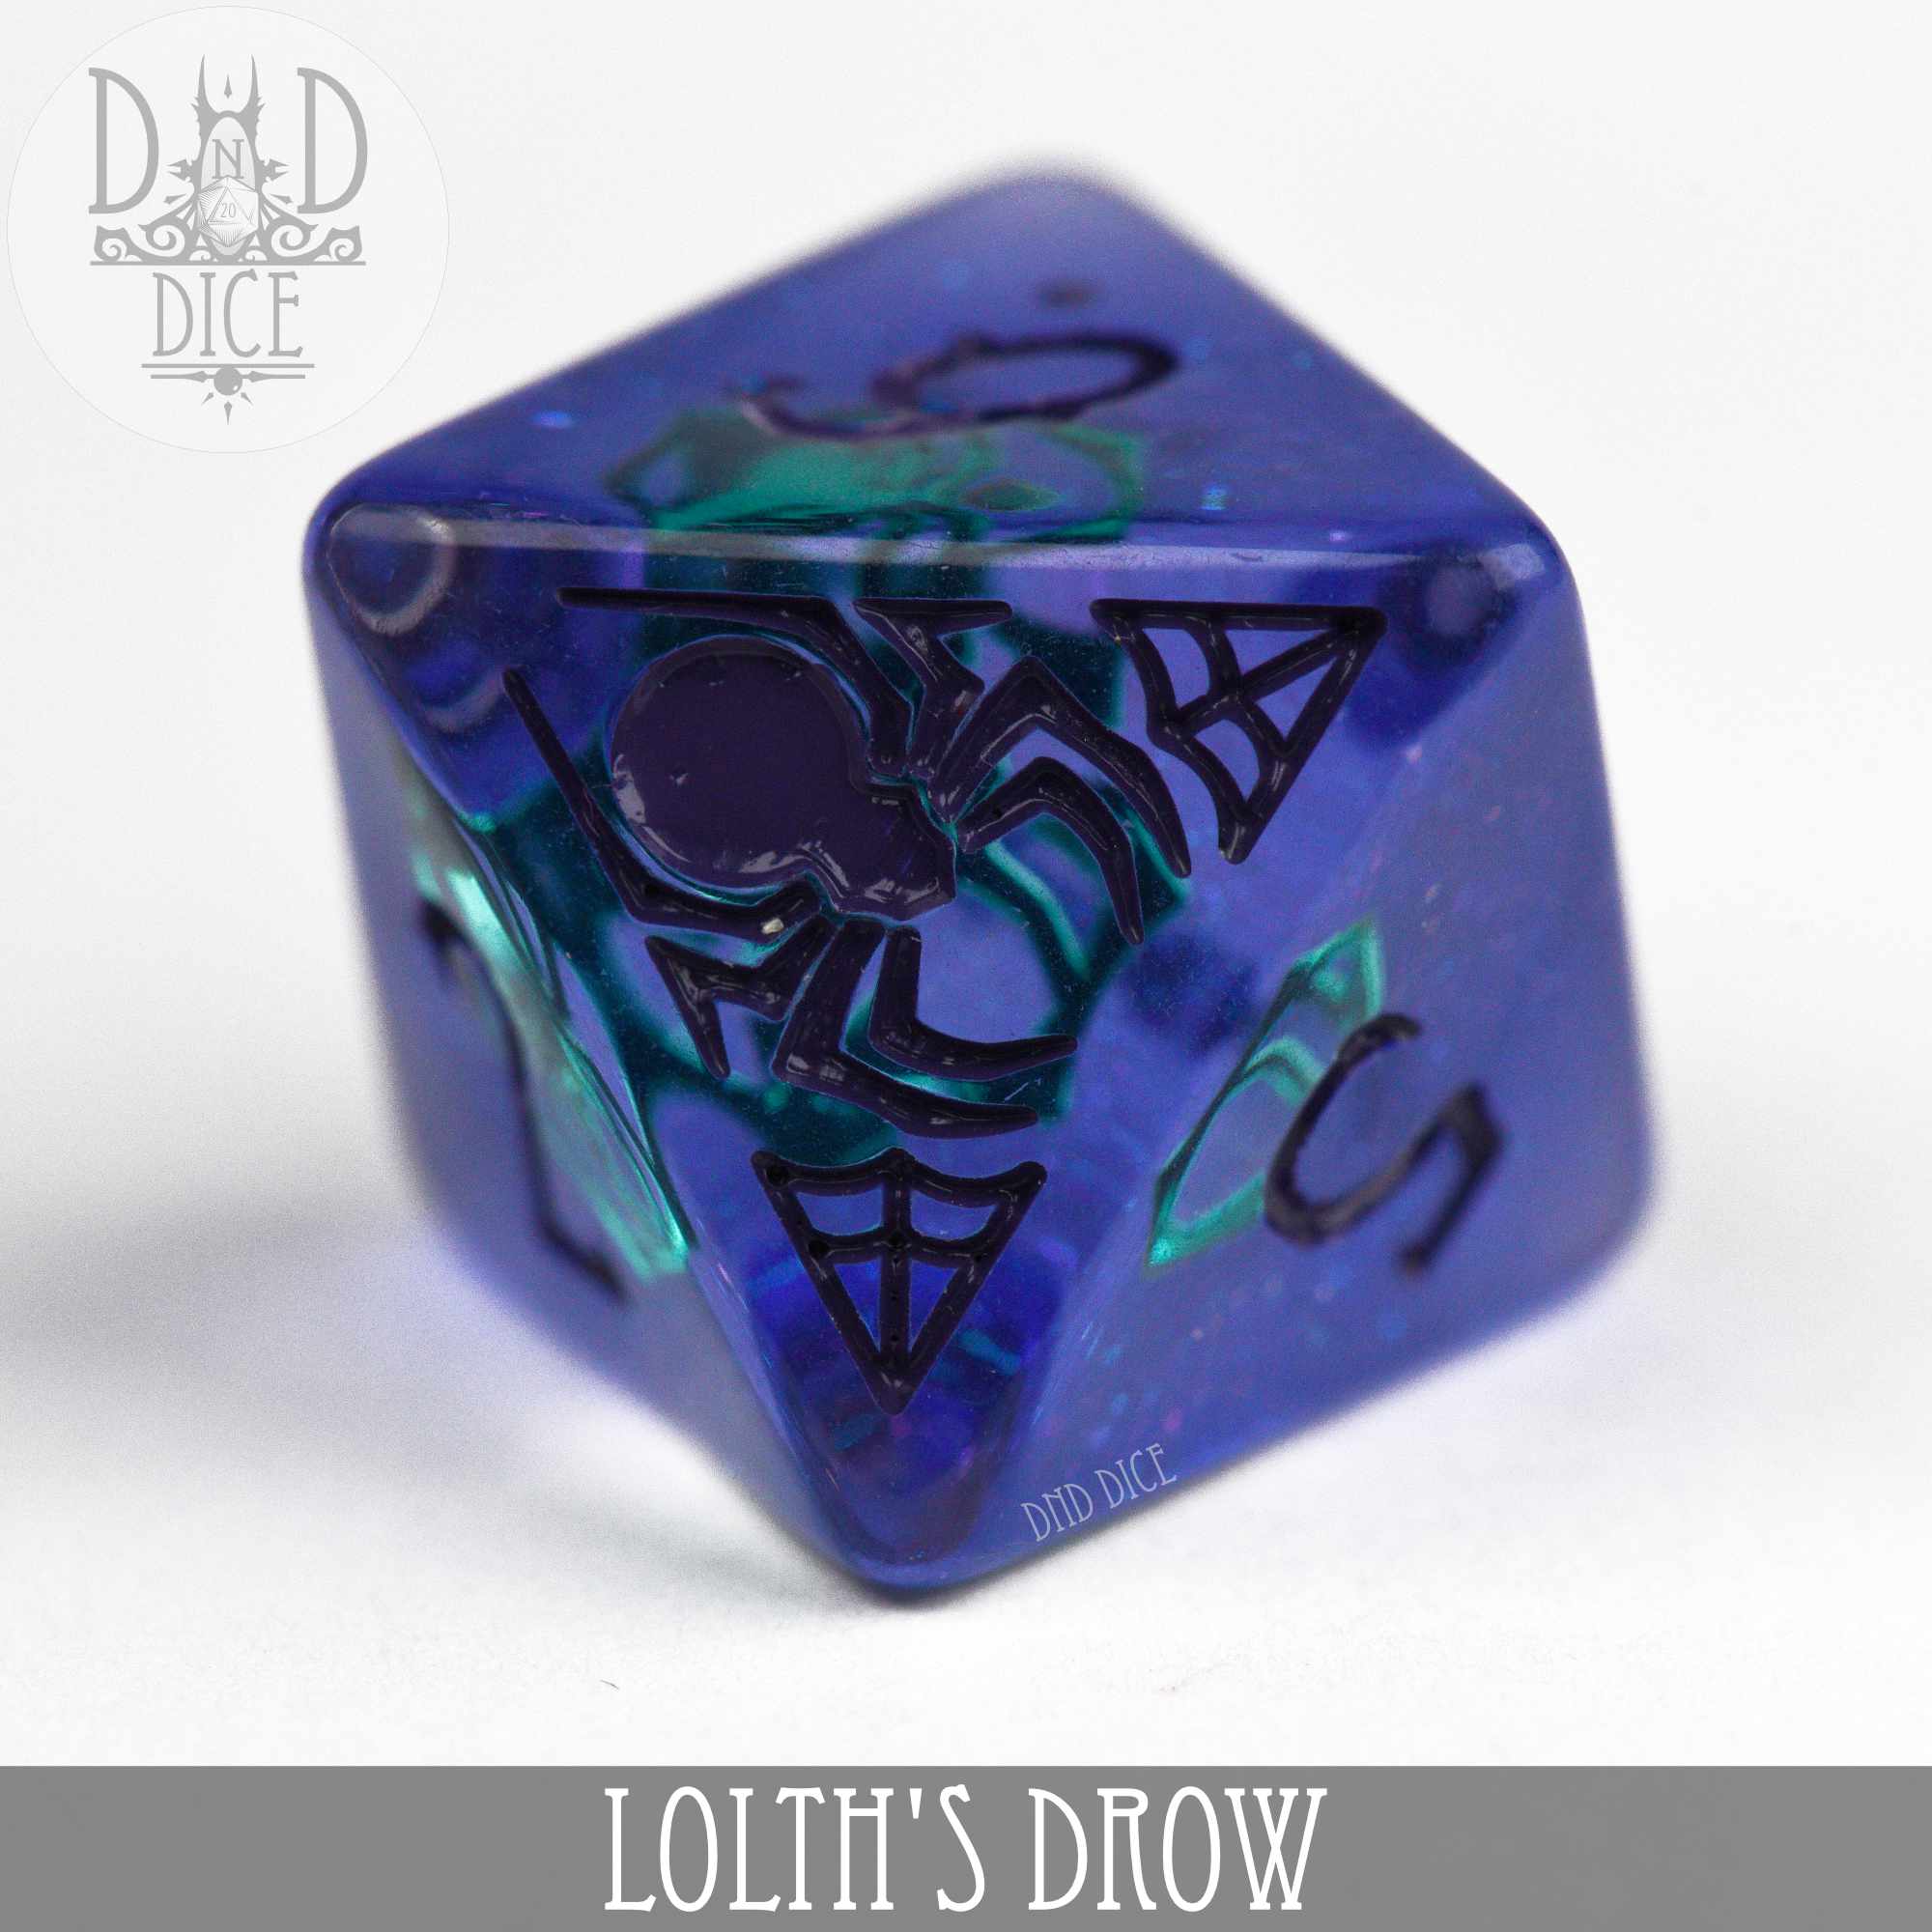 Lolth's Drow 11 Dice Set